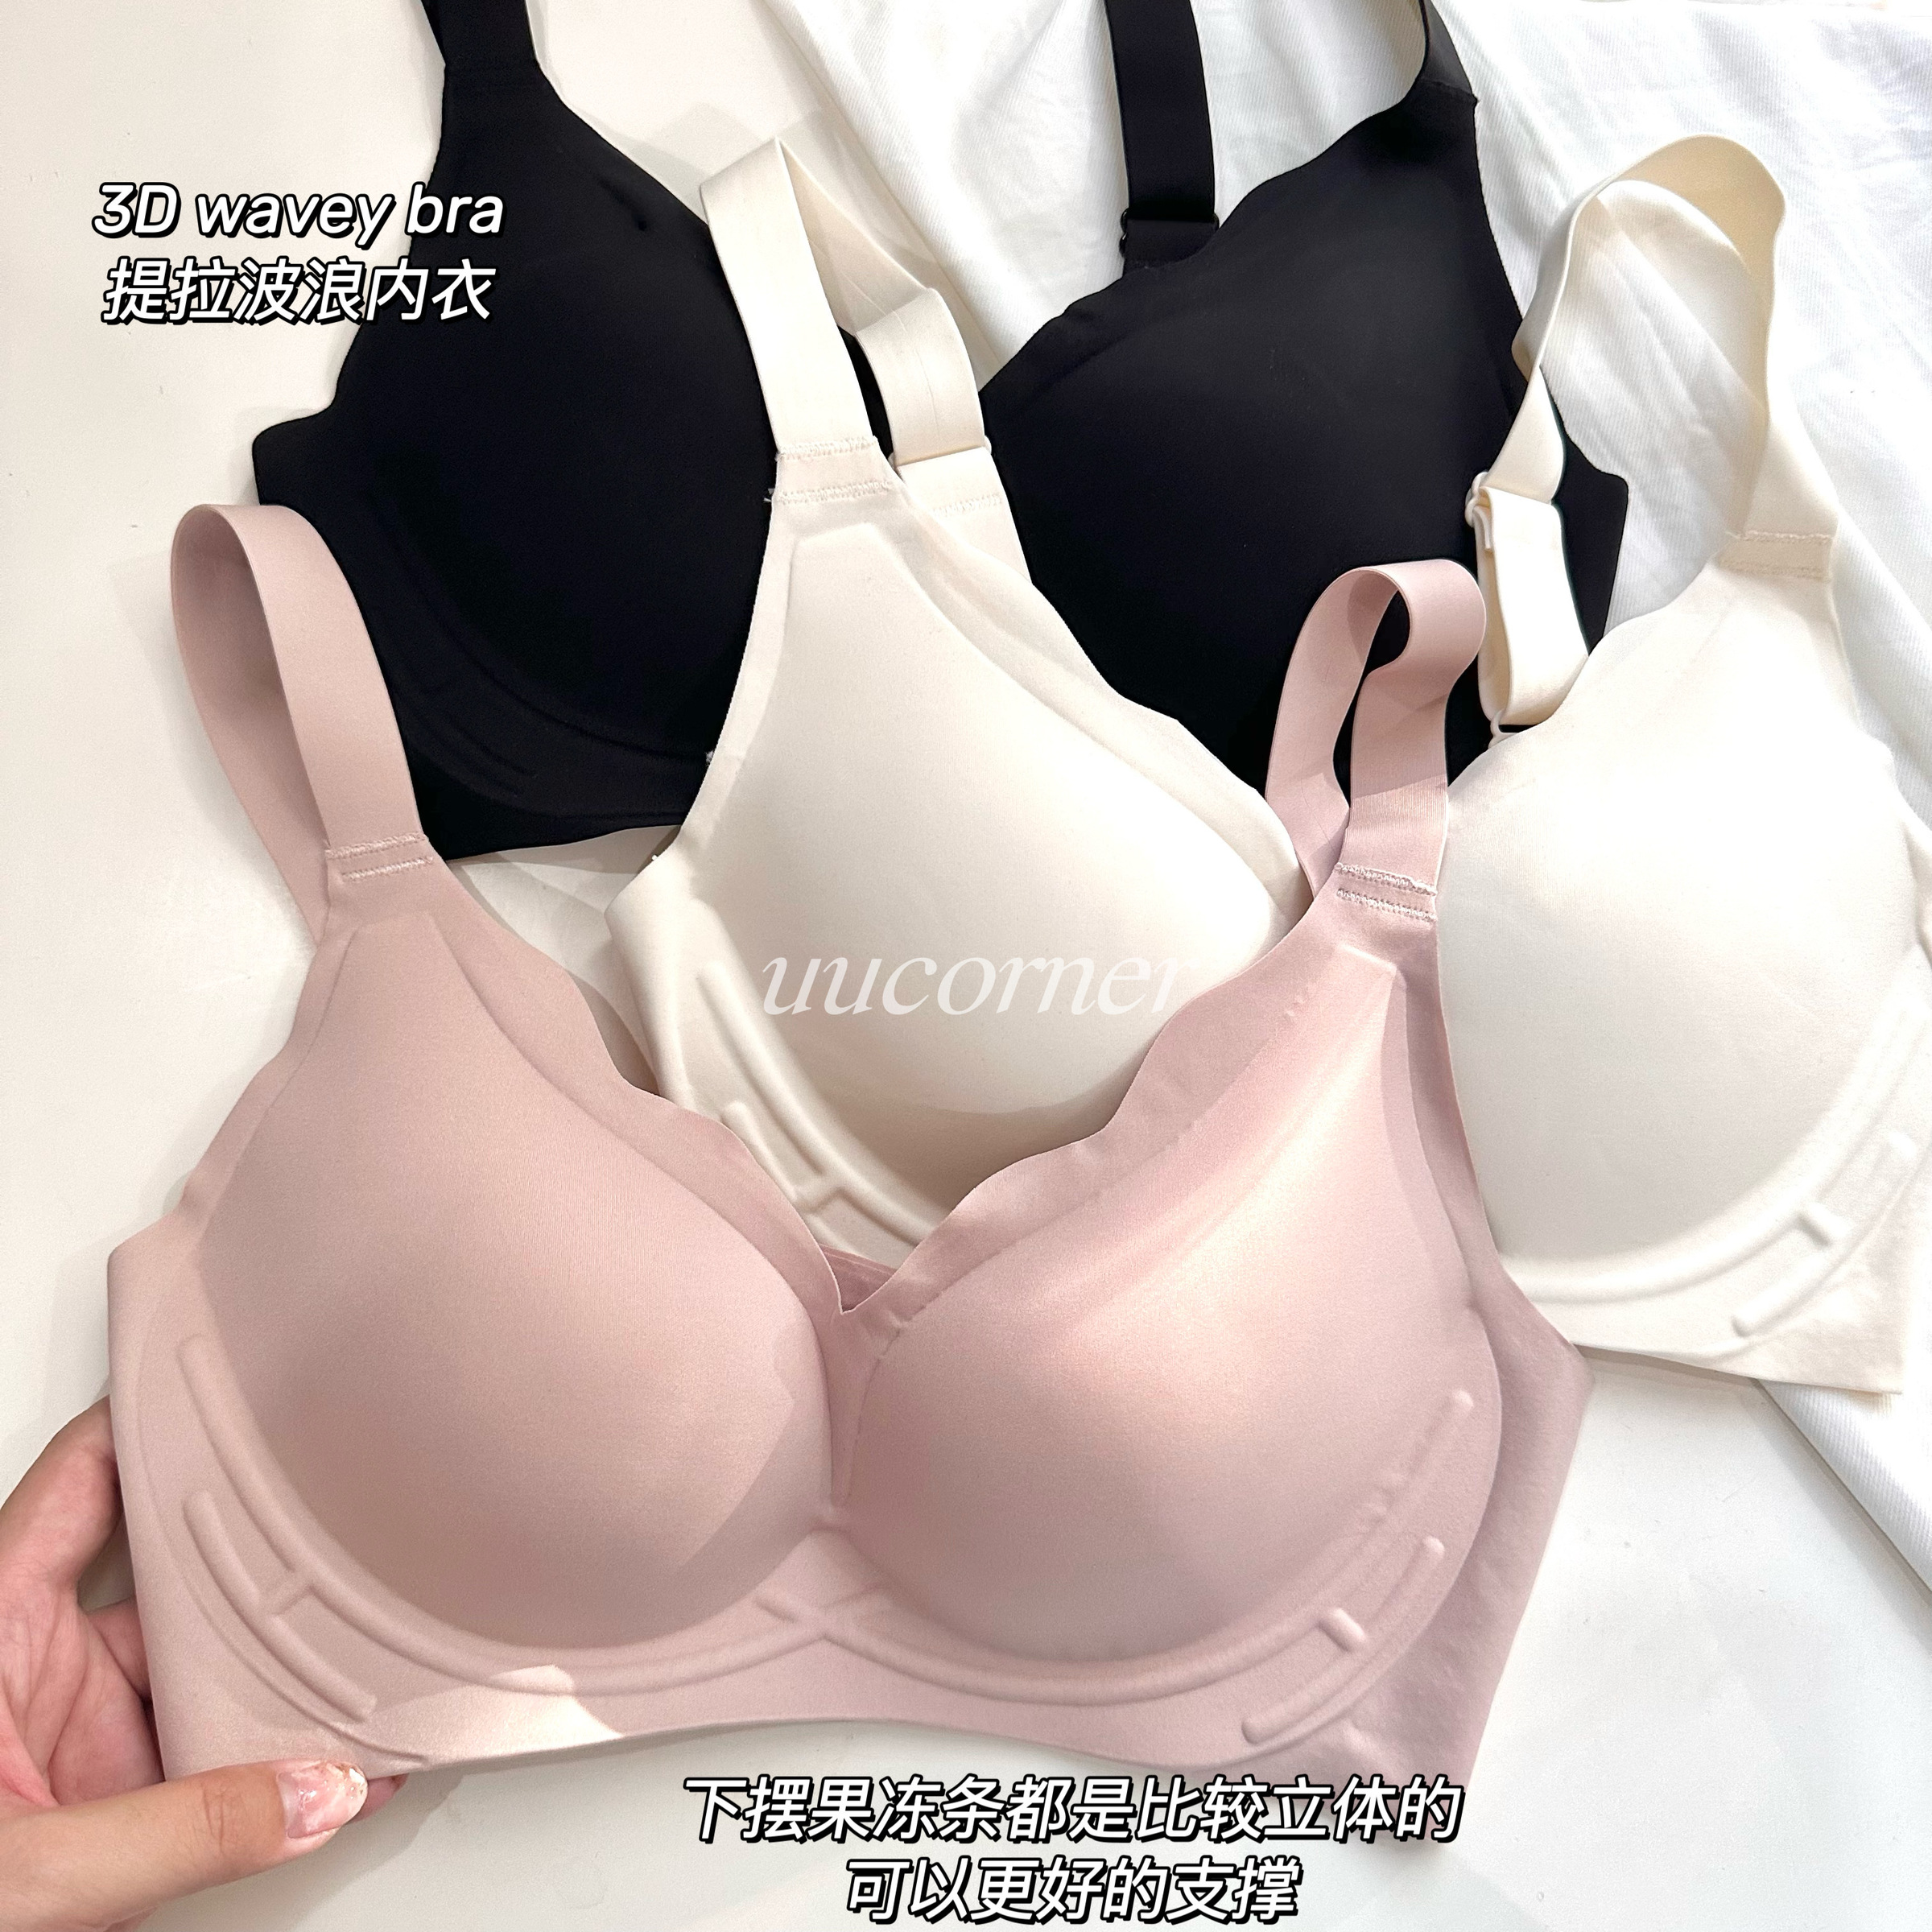 Qoo10 - Thailand Latex underwear Wireless and Seamless bras